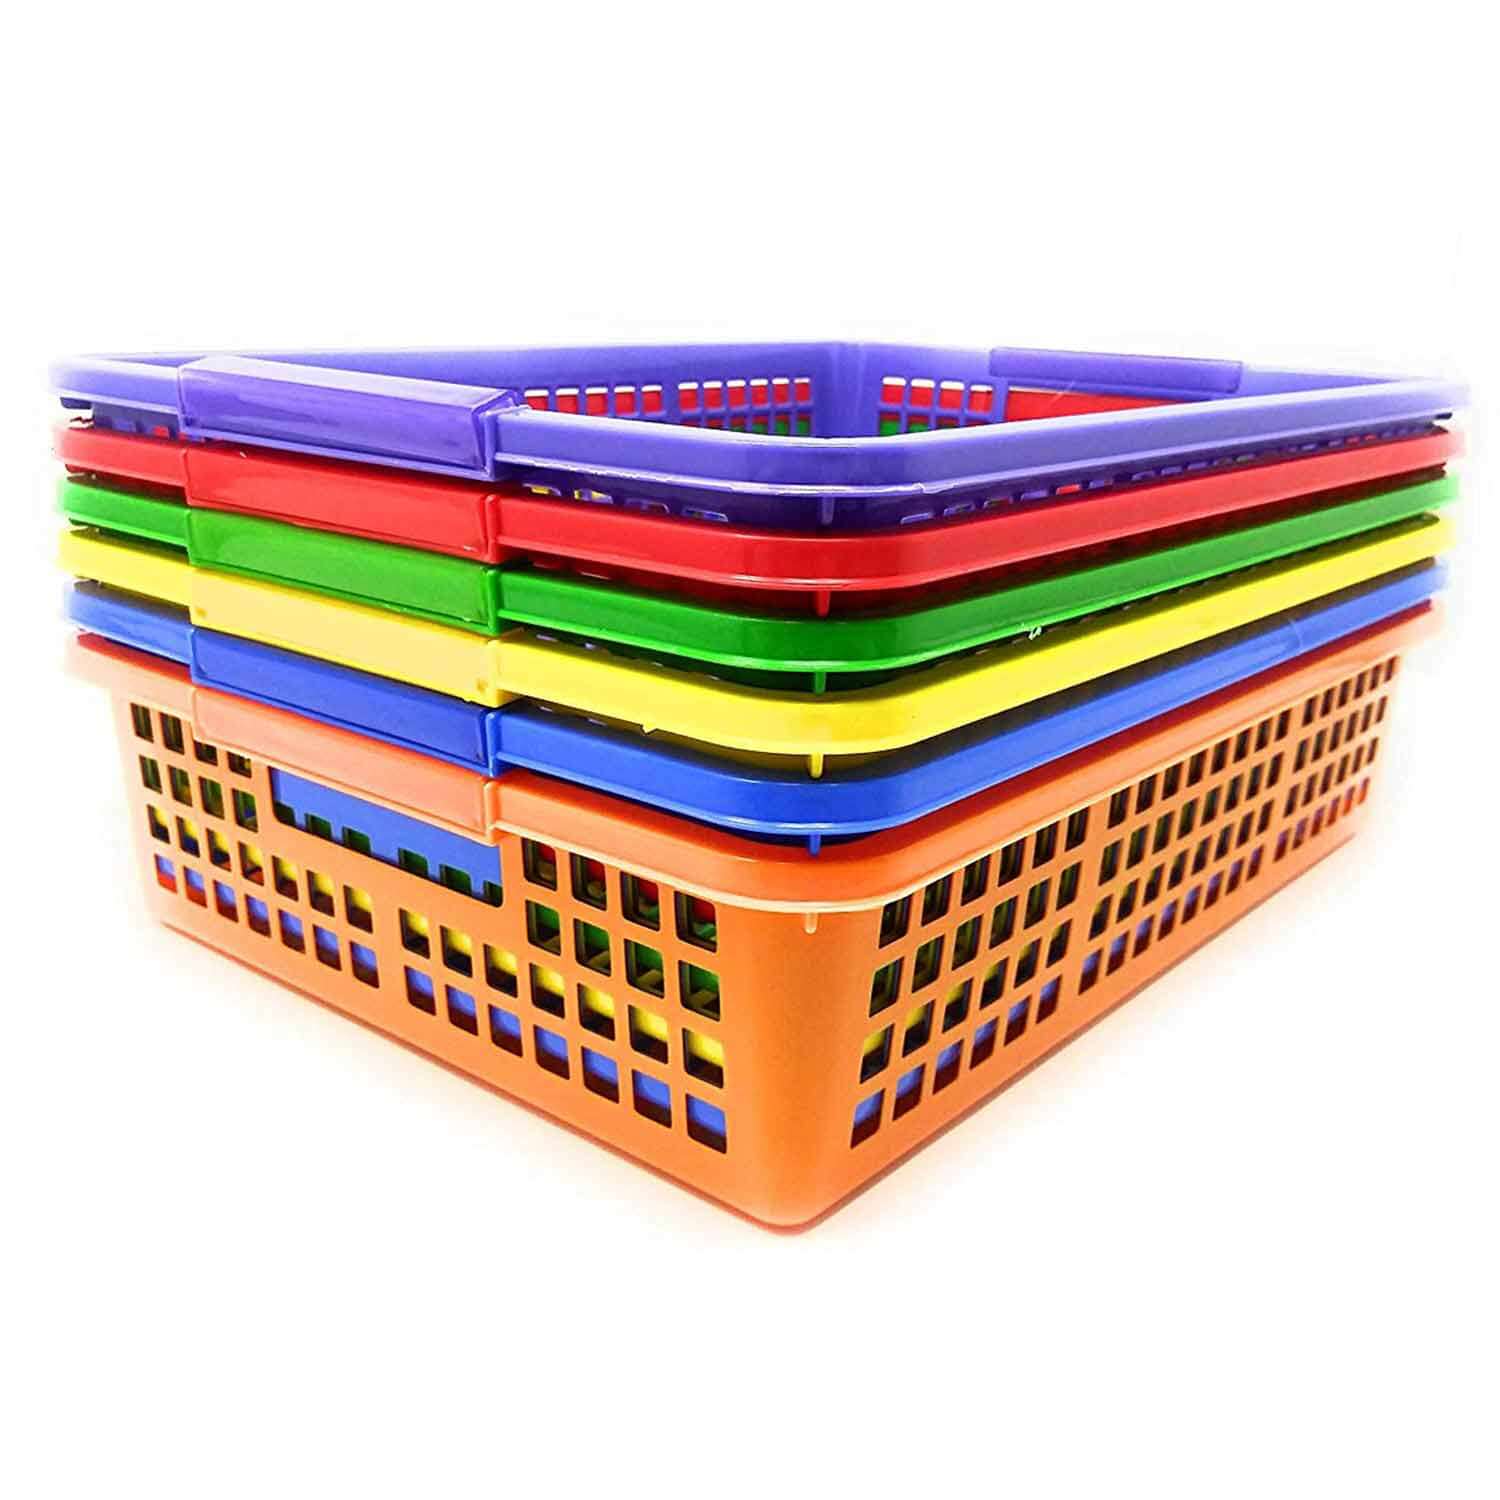 W16596217 Classroom Storage Baskets with Handles - 6 Pc.